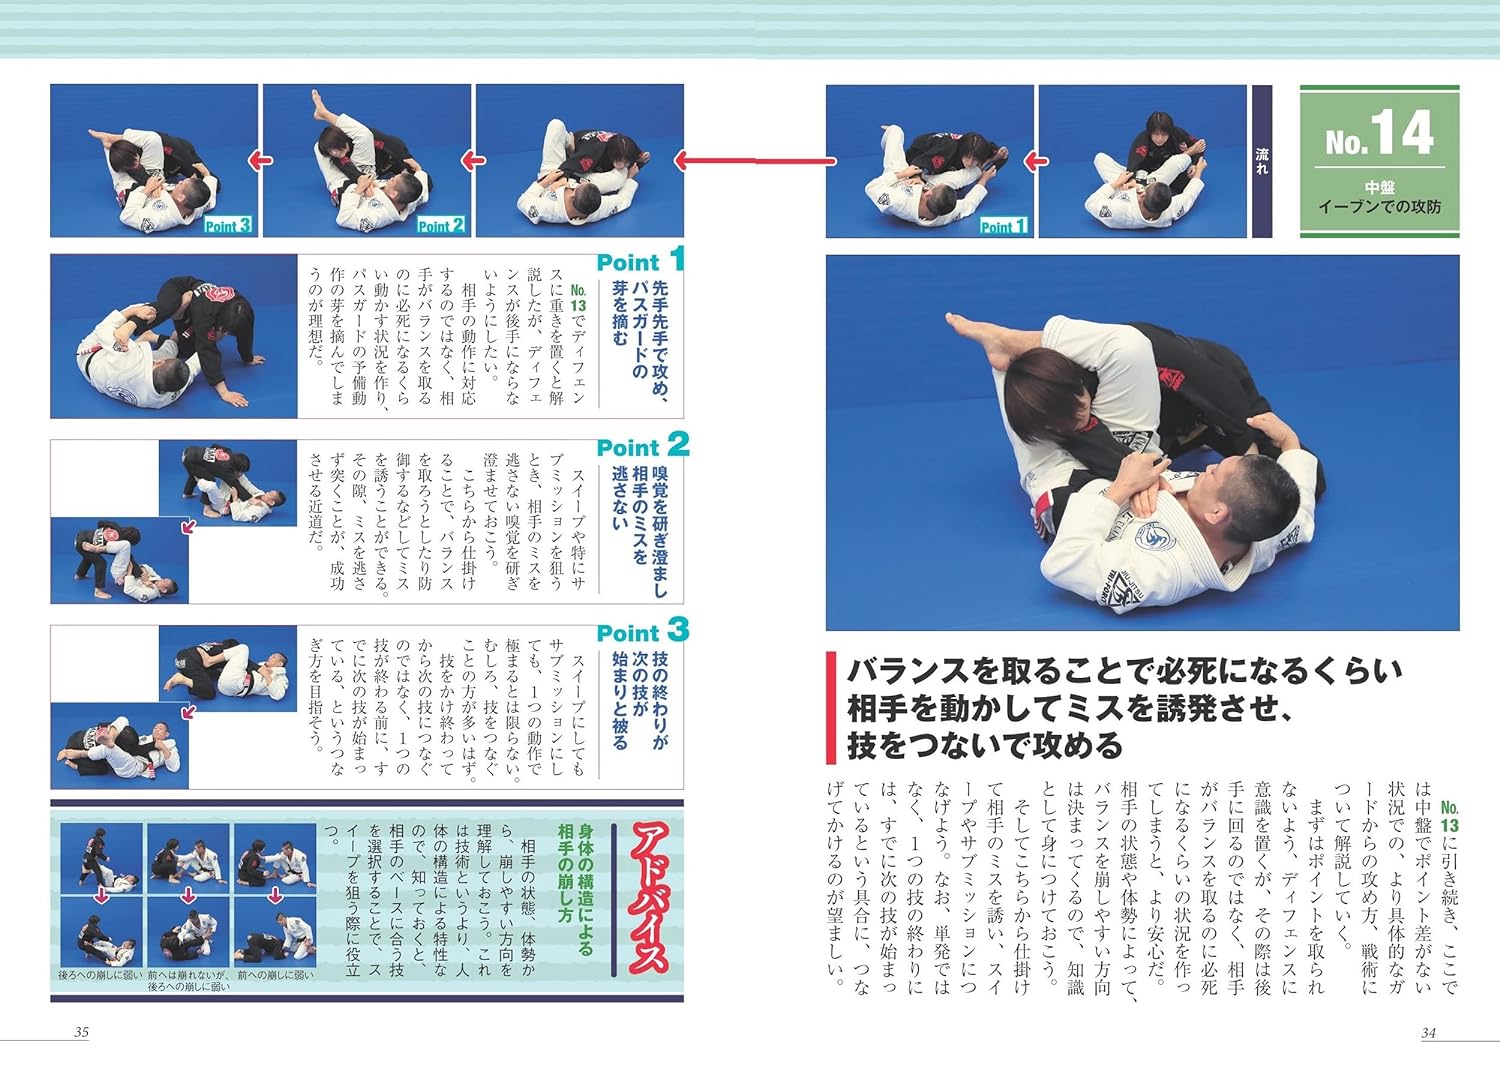 Brazilian Jiu-Jitsu Guaranteed Victory! Book w QR Codes by Mitsuyoshi Hayakawa